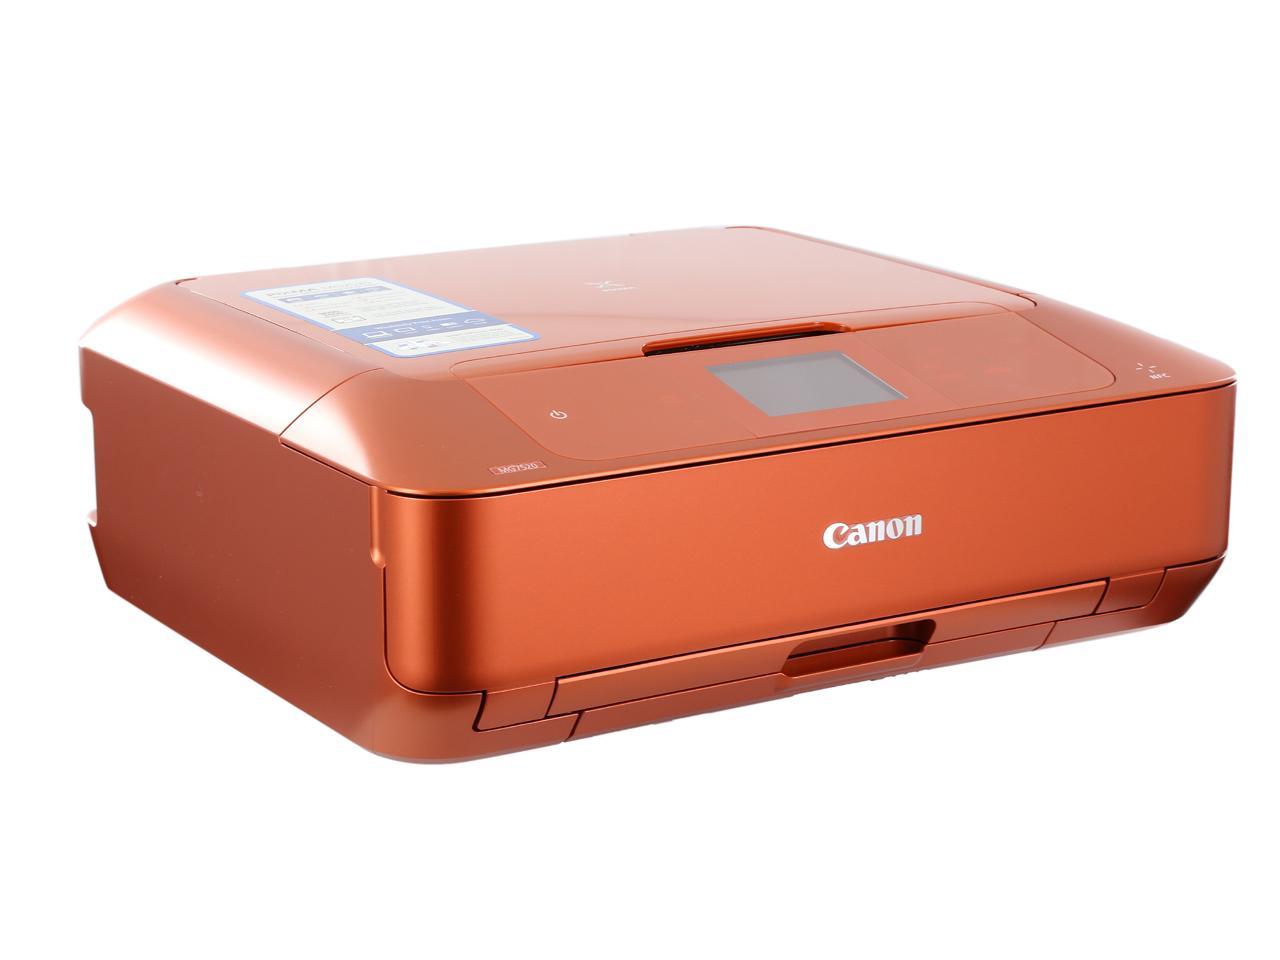 canon mg7520 wireless color cloud printer